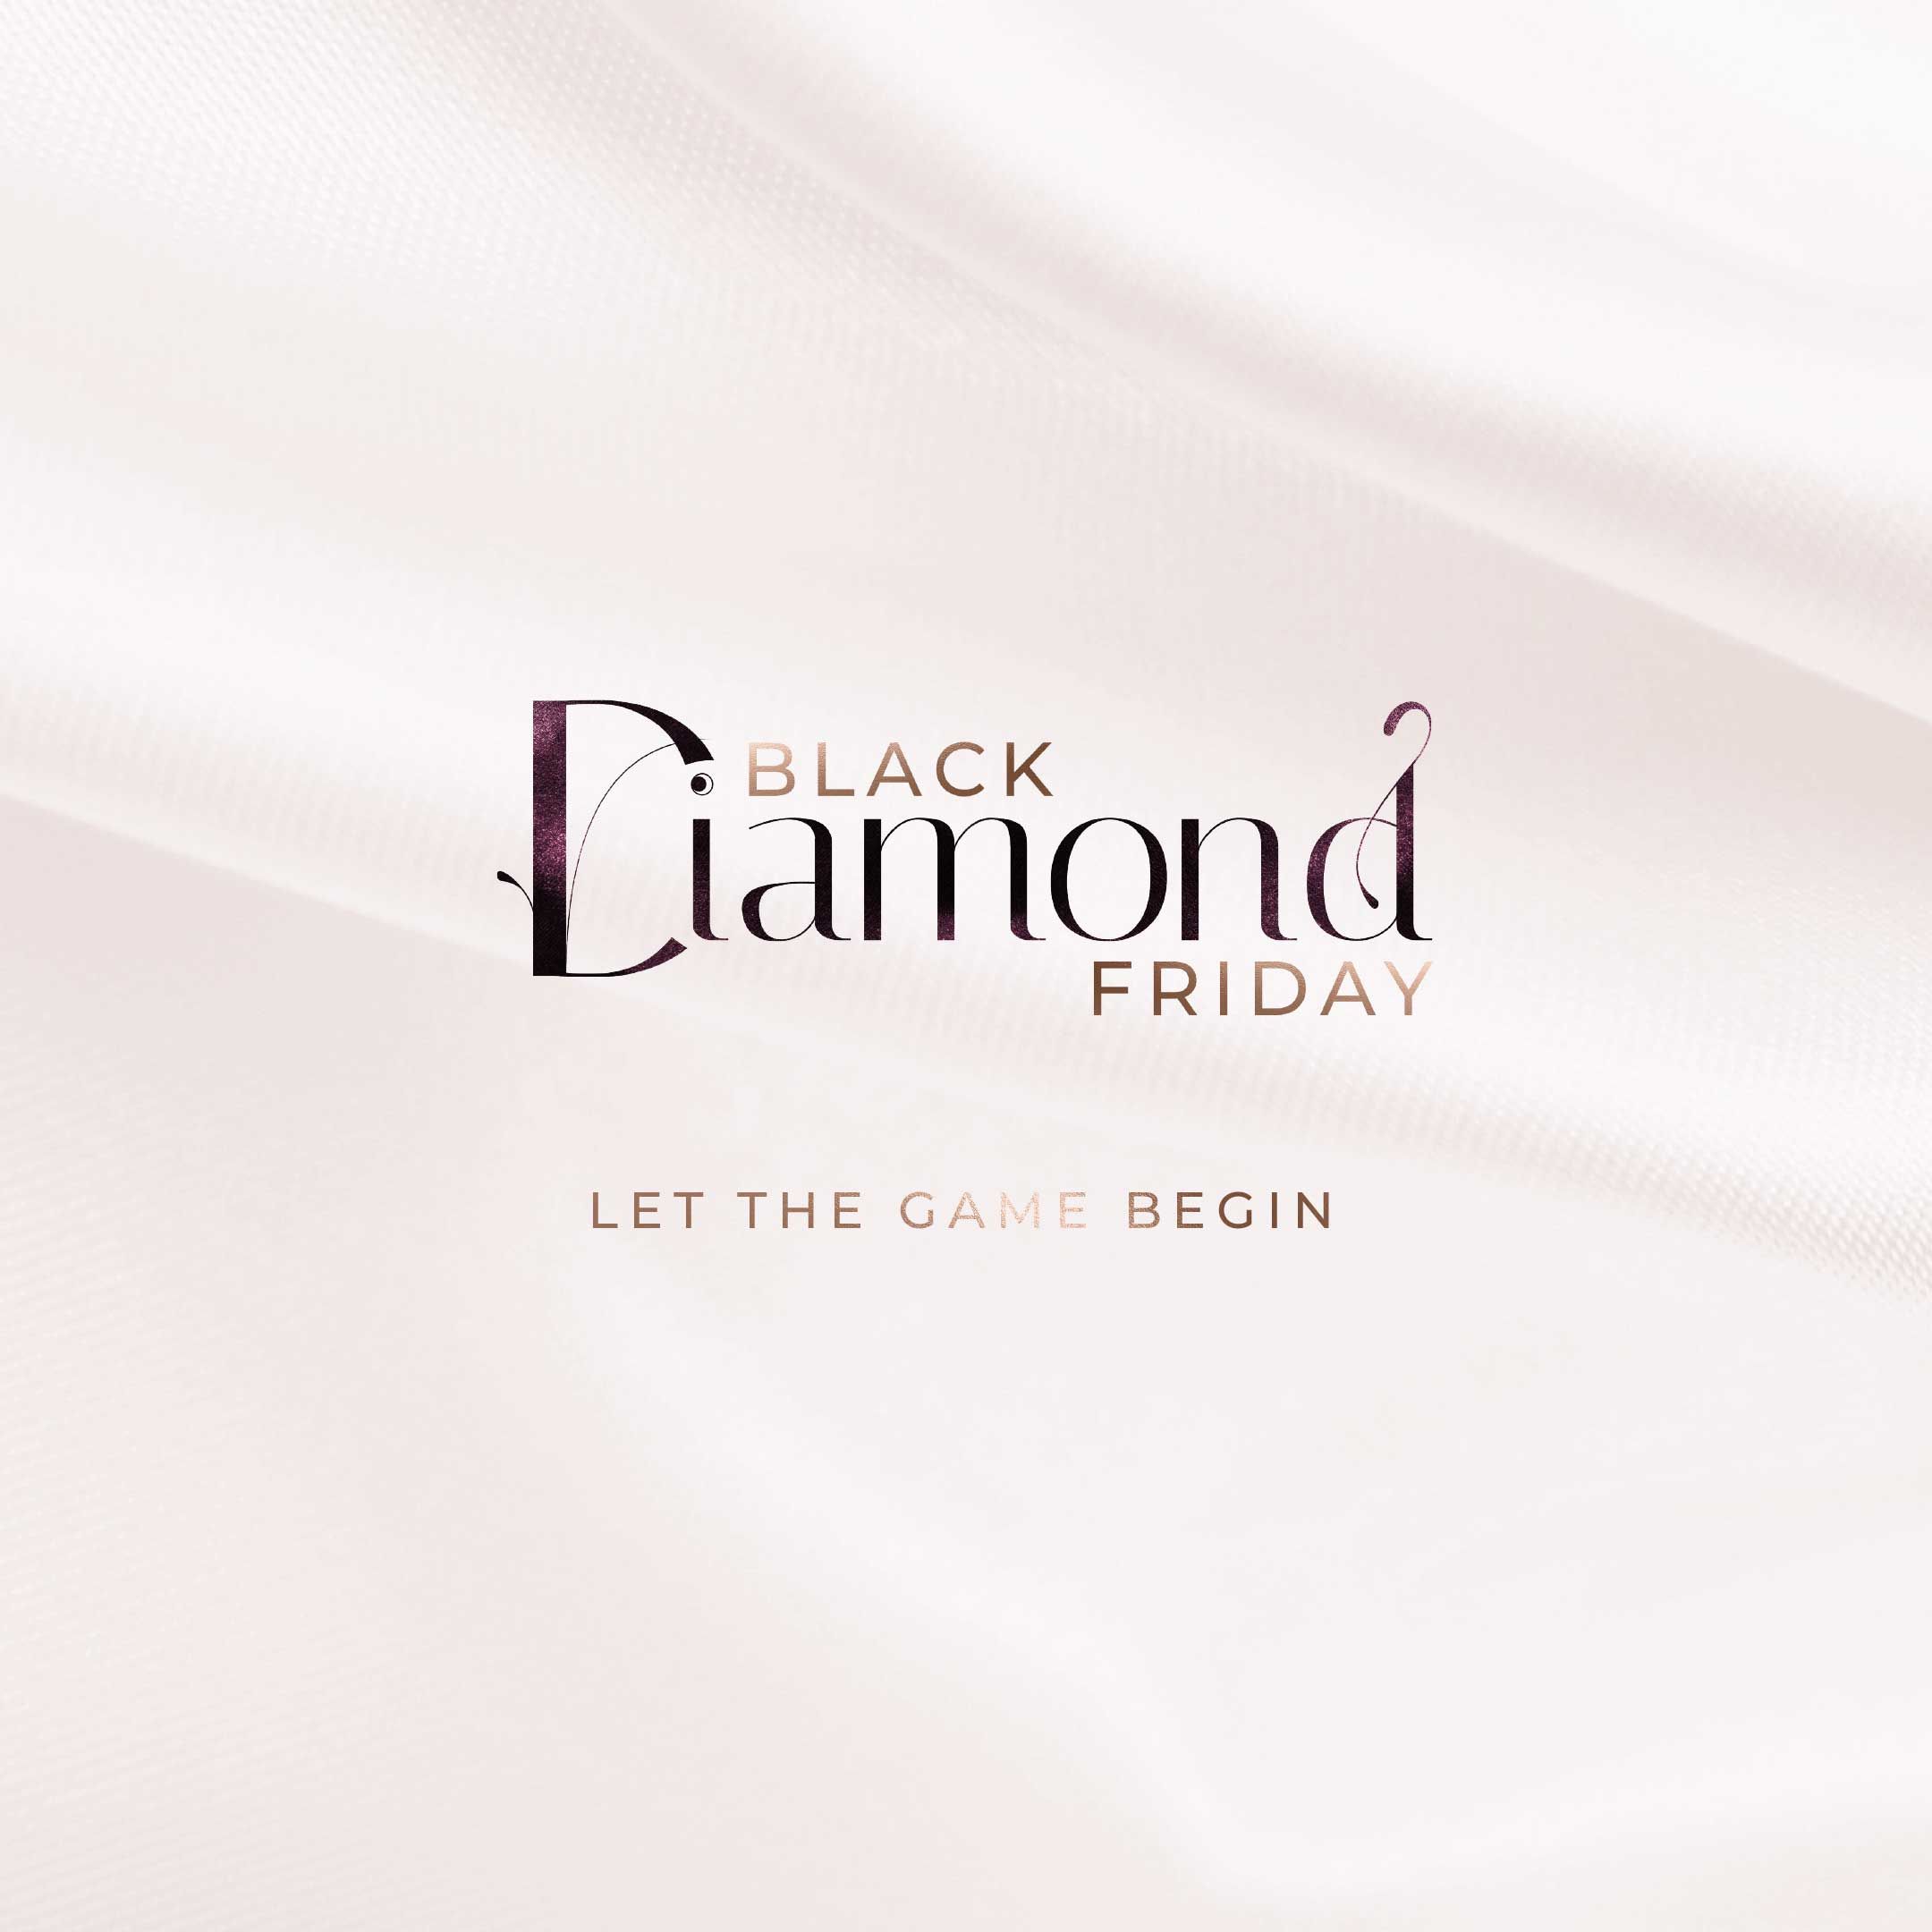 Black Diamond Friday x Mumit